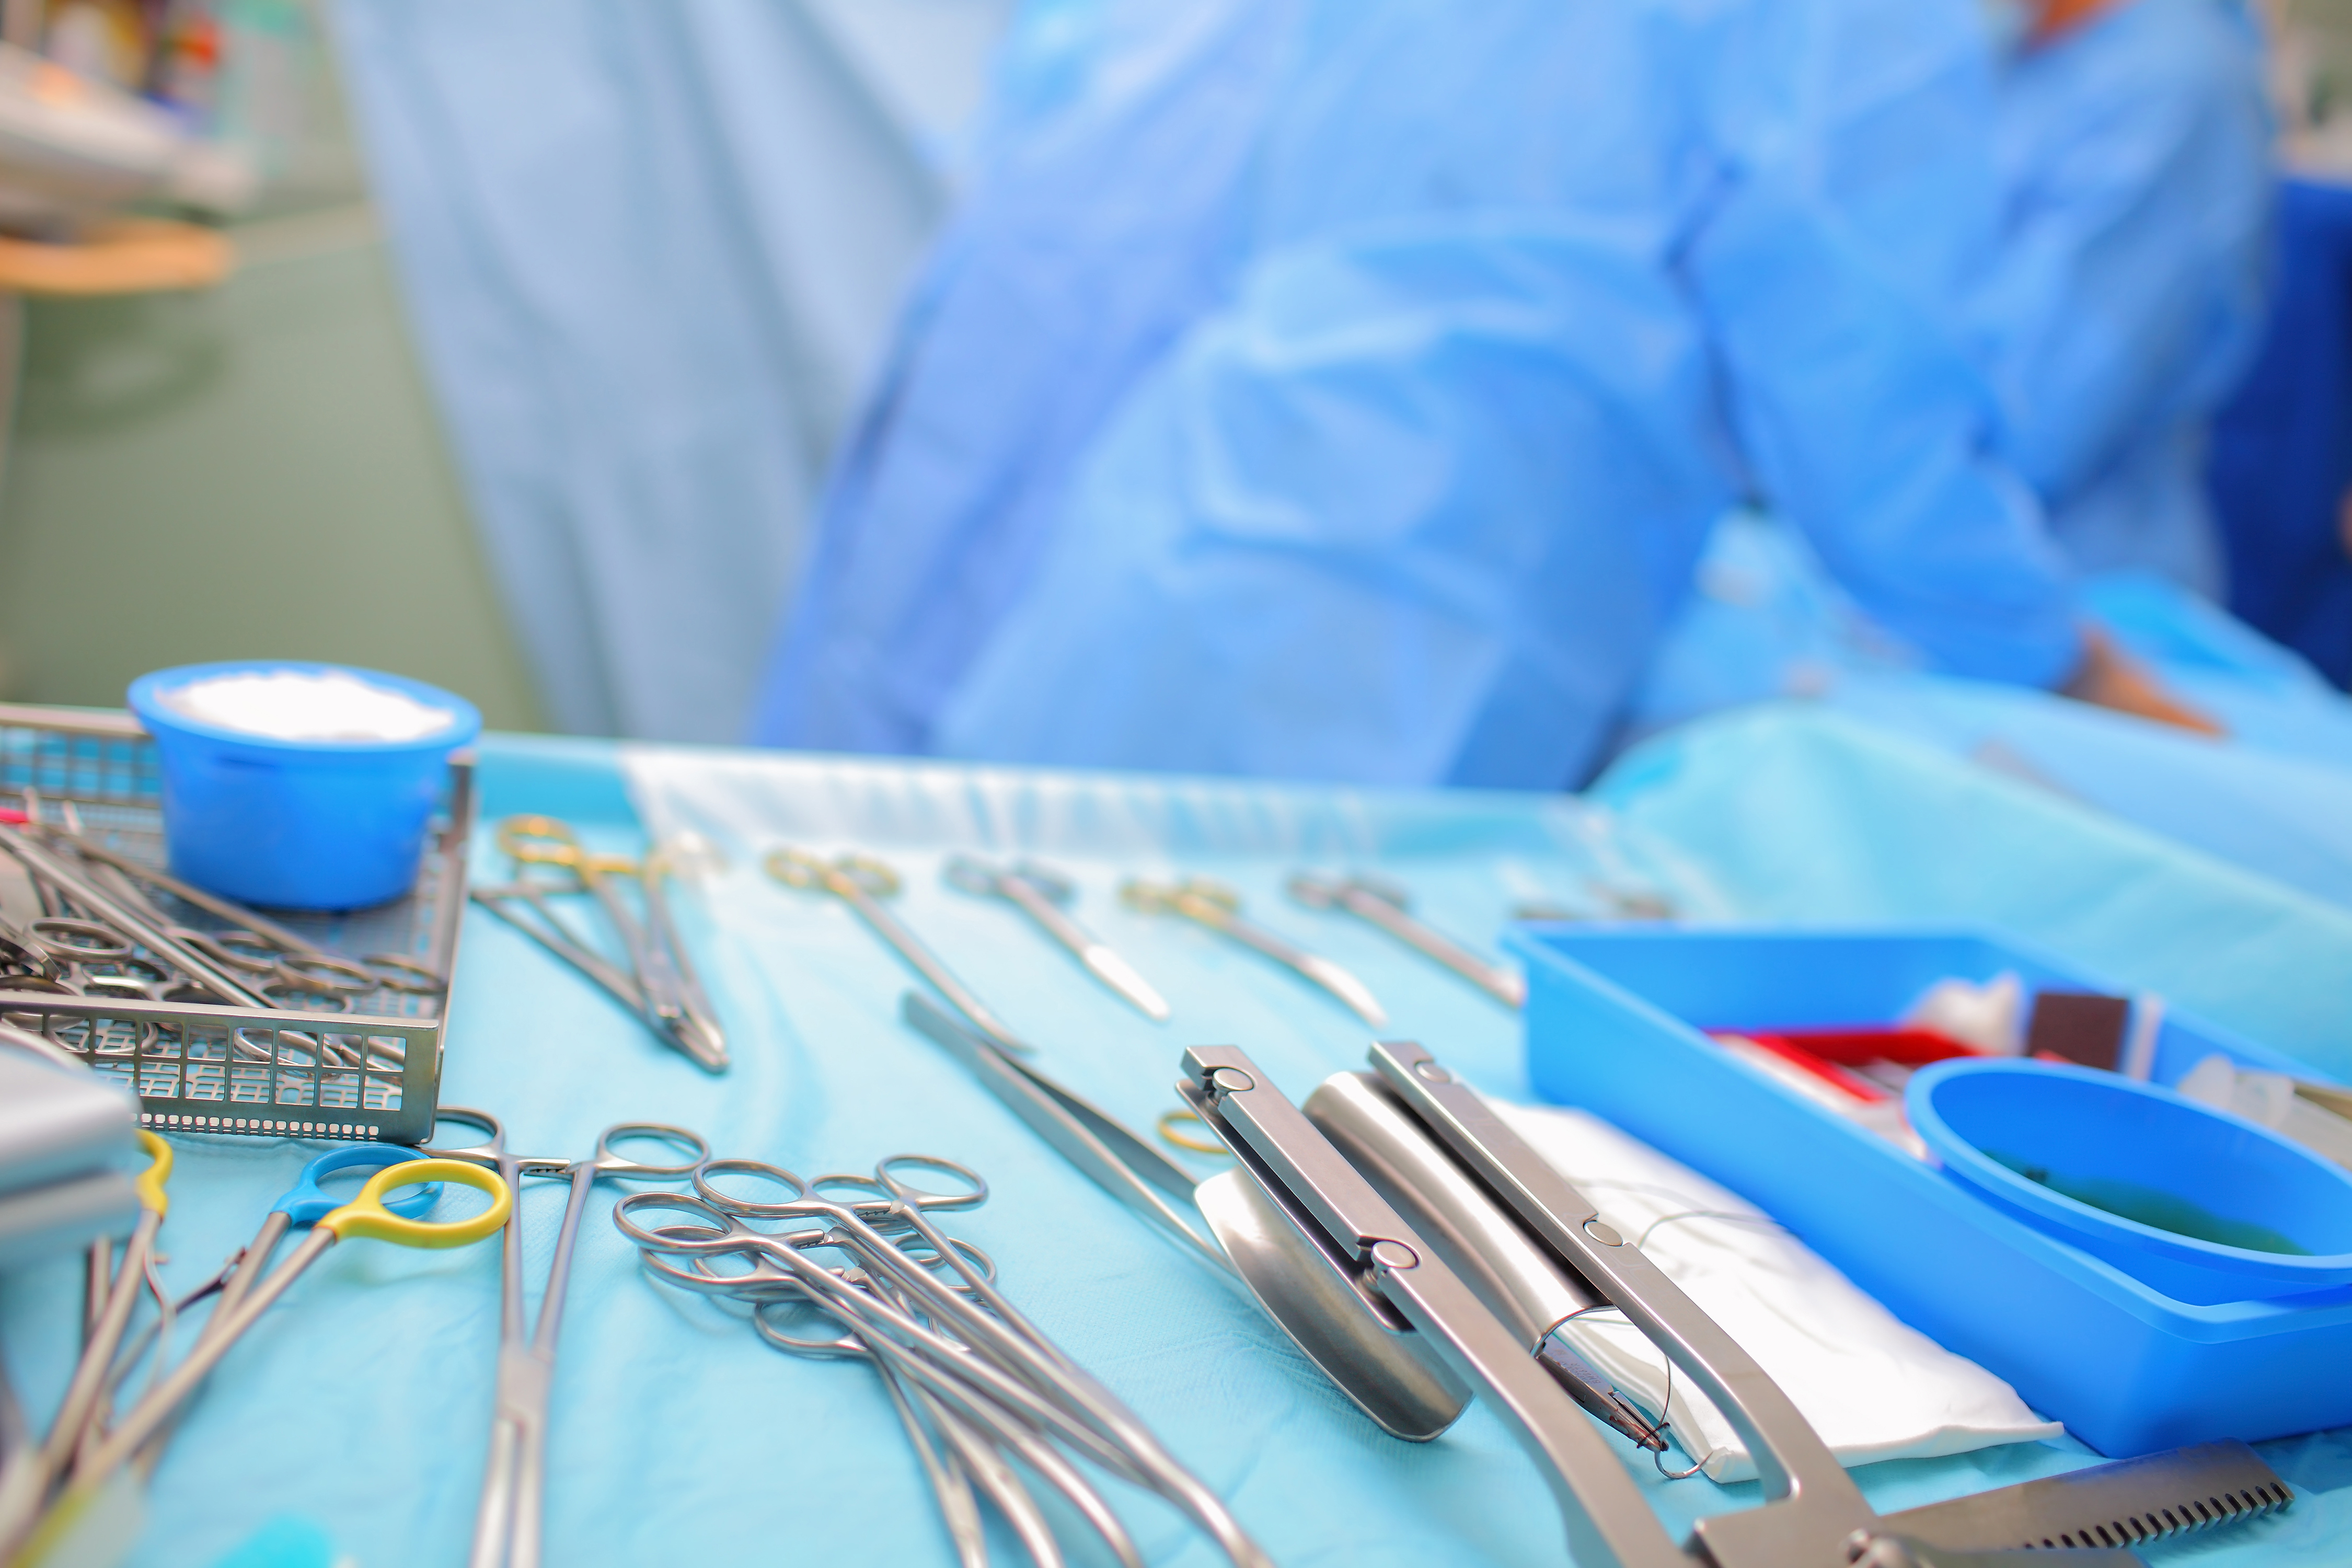 Materiais para realizar cirurgia de buco-maxilo-facial - Justiça decide que plano de saúde deve custear